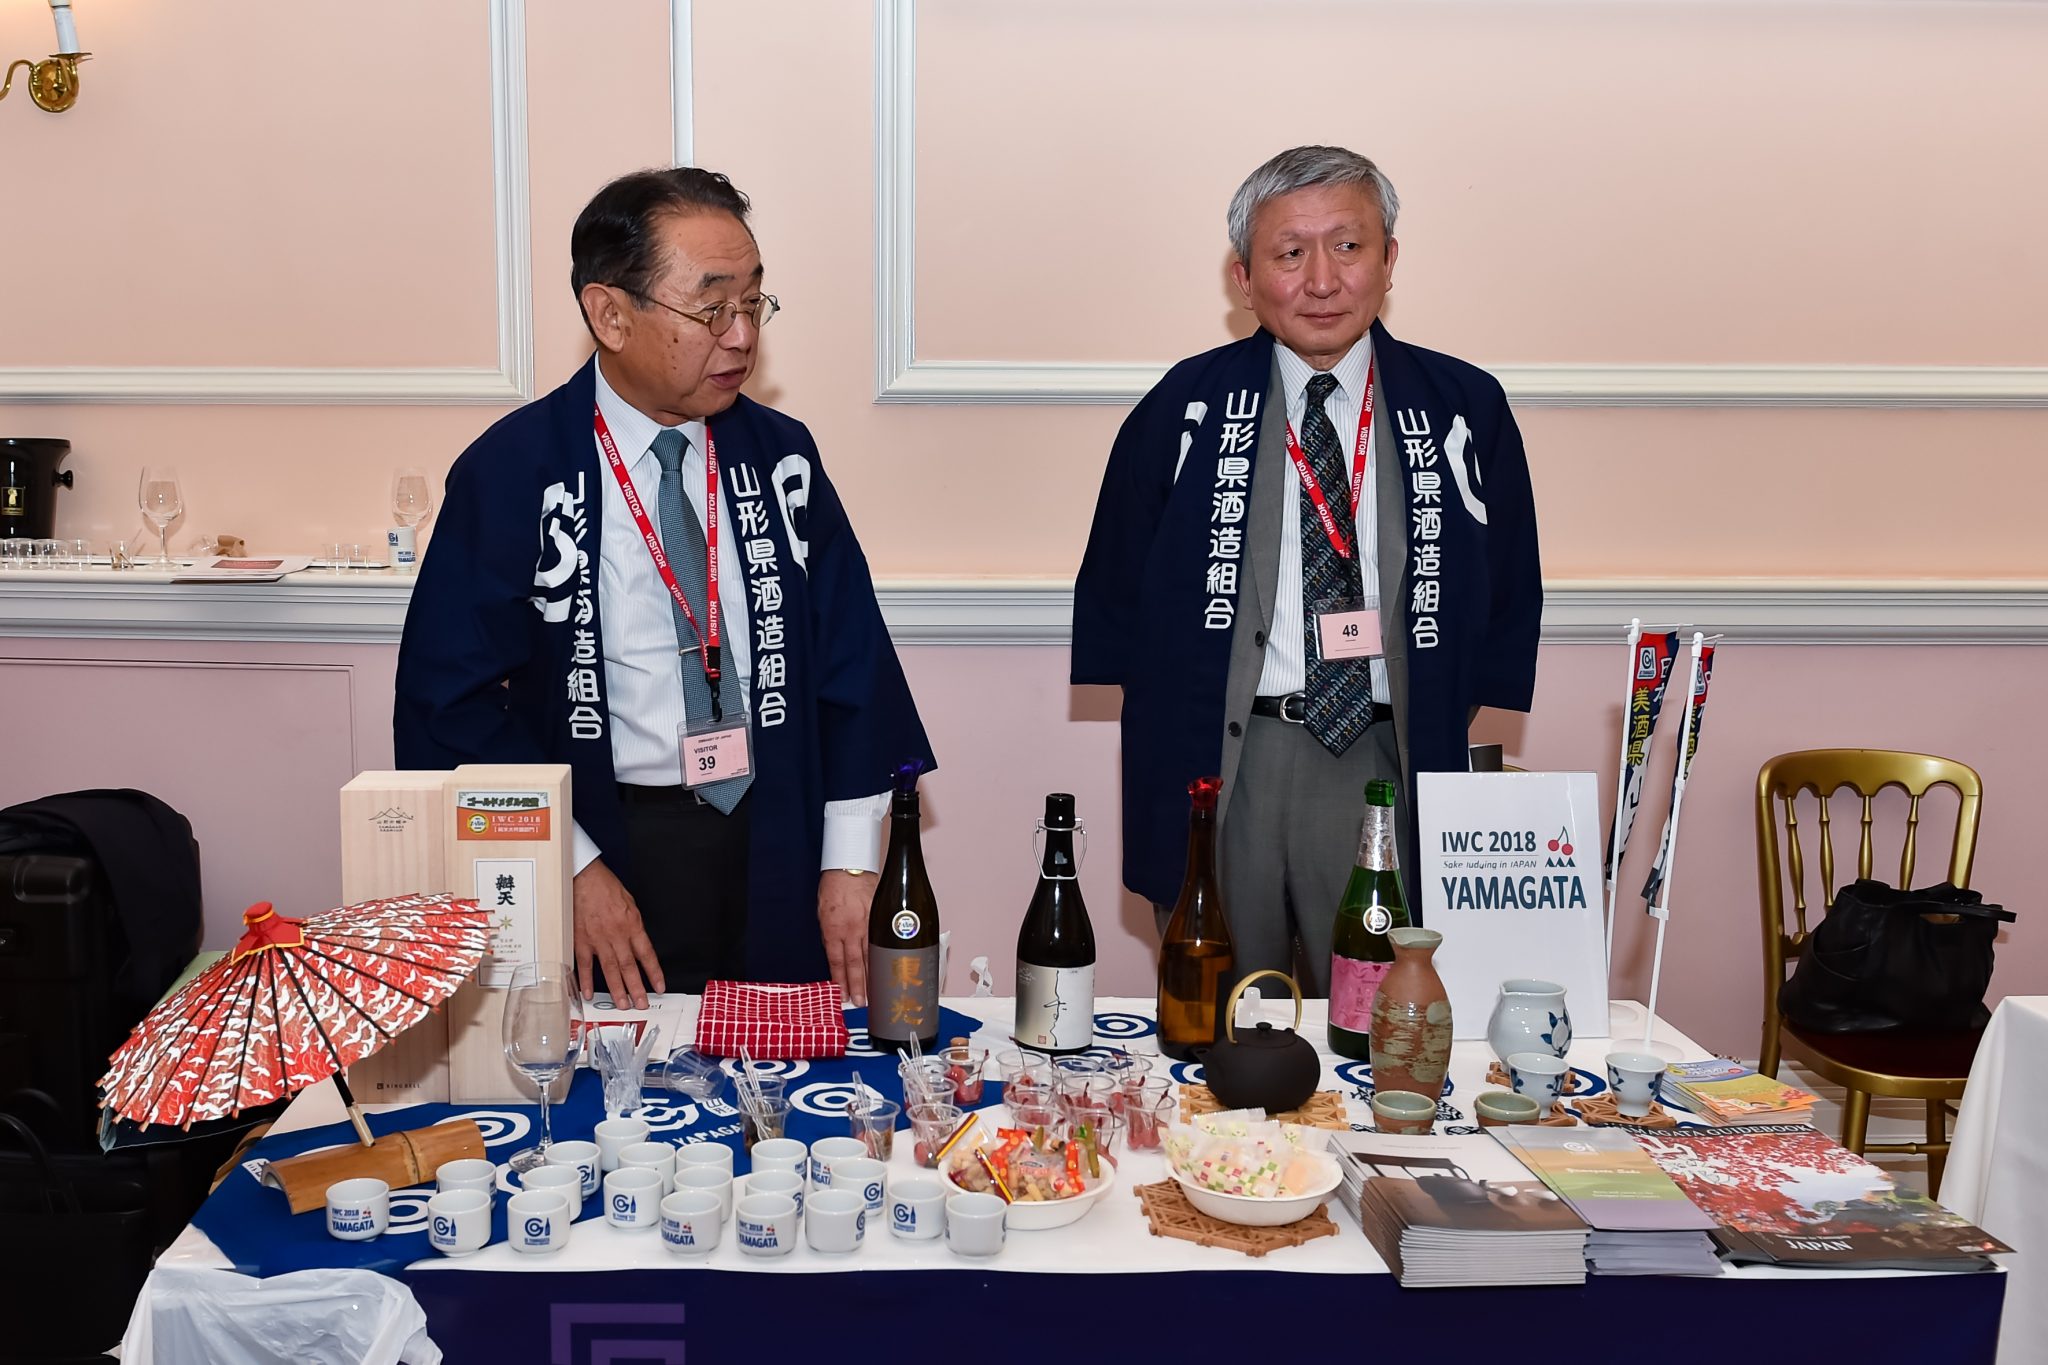 You are currently viewing IWC 2018 Award Winning Sake Tasting